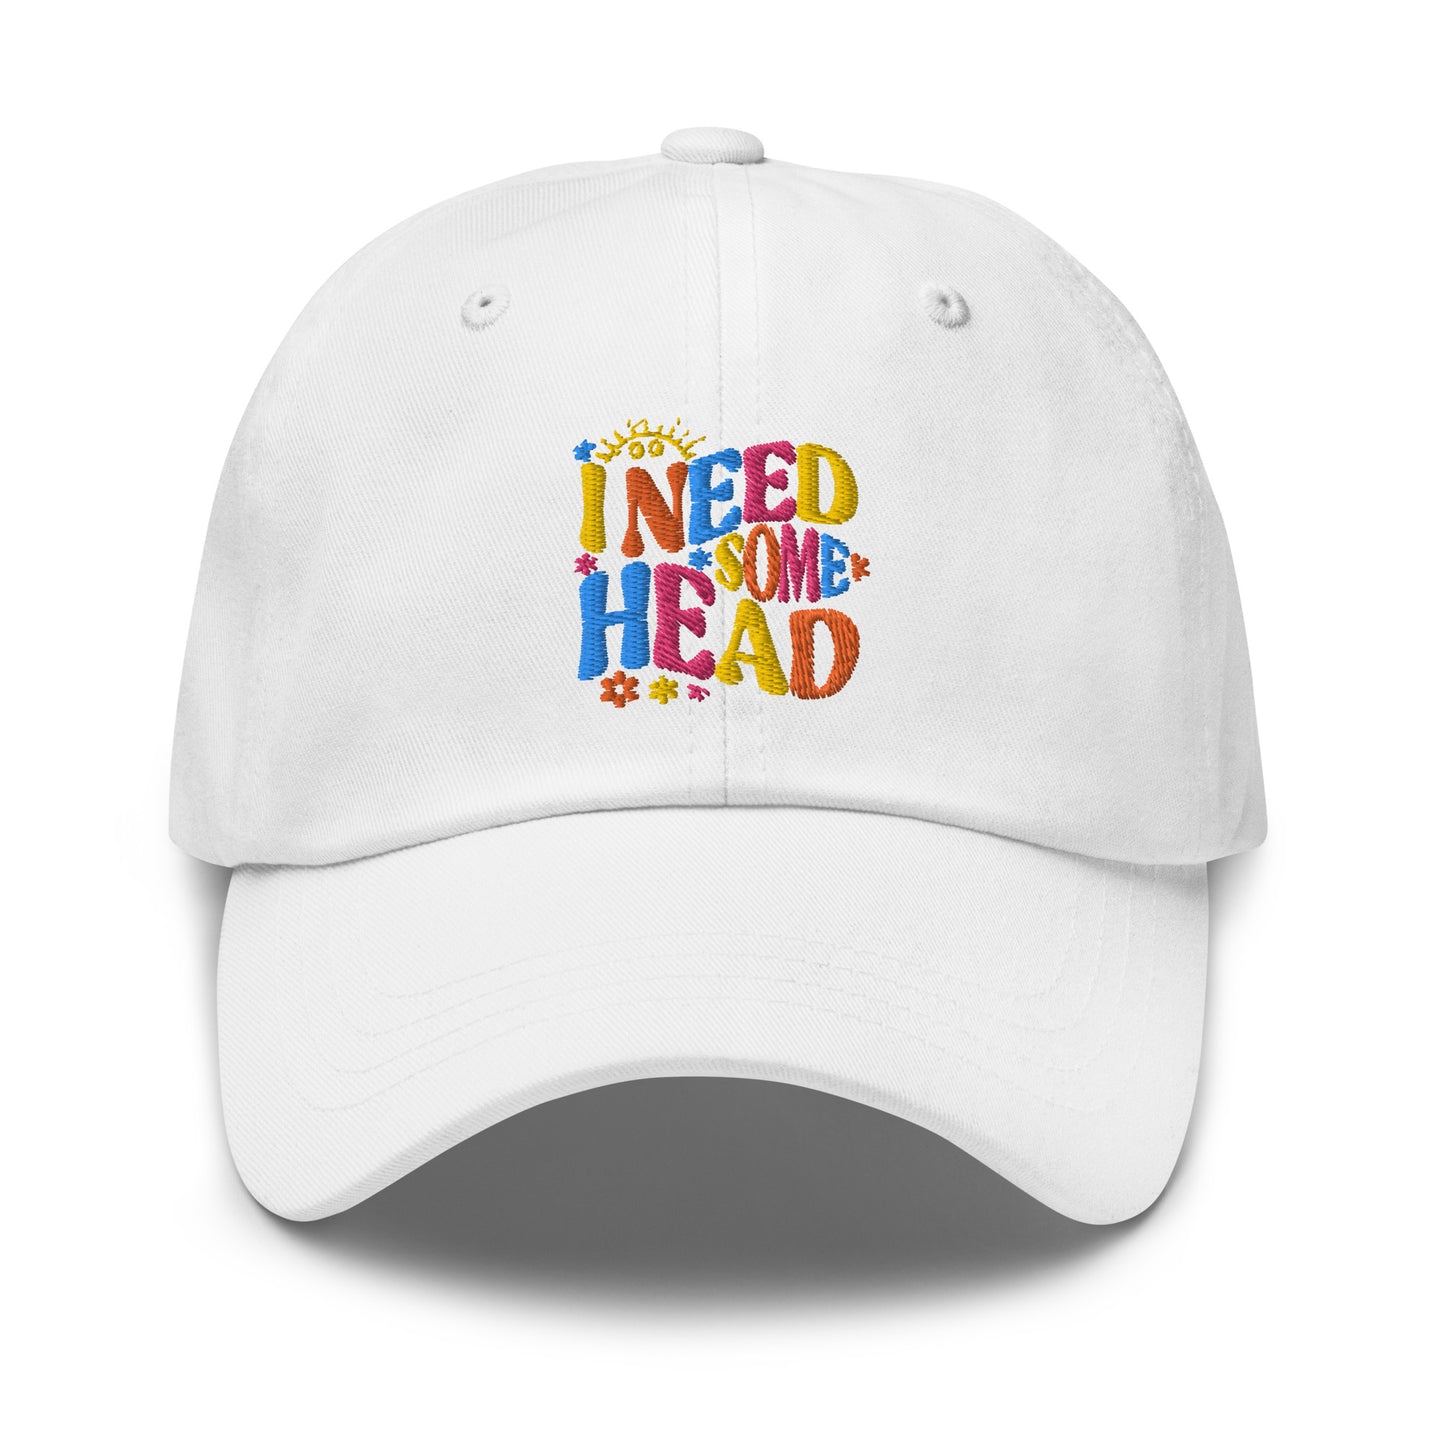 I Need Some Head hat